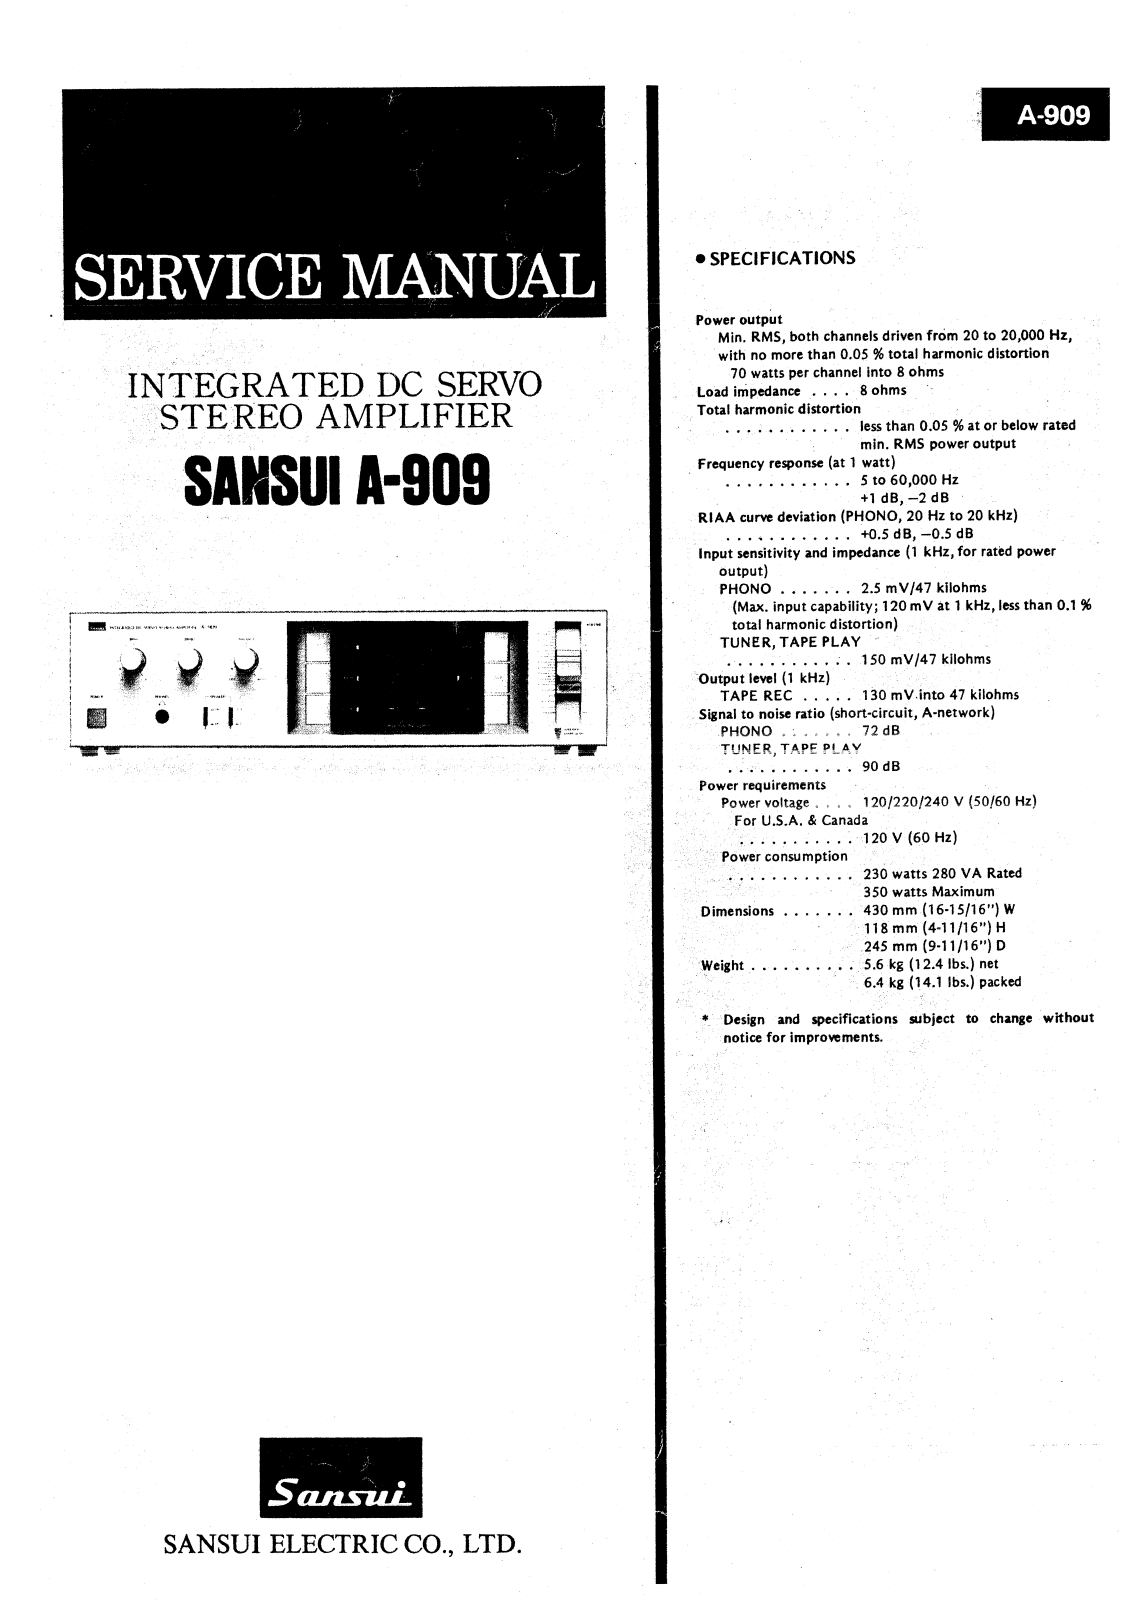 Sansui A-909 Service manual